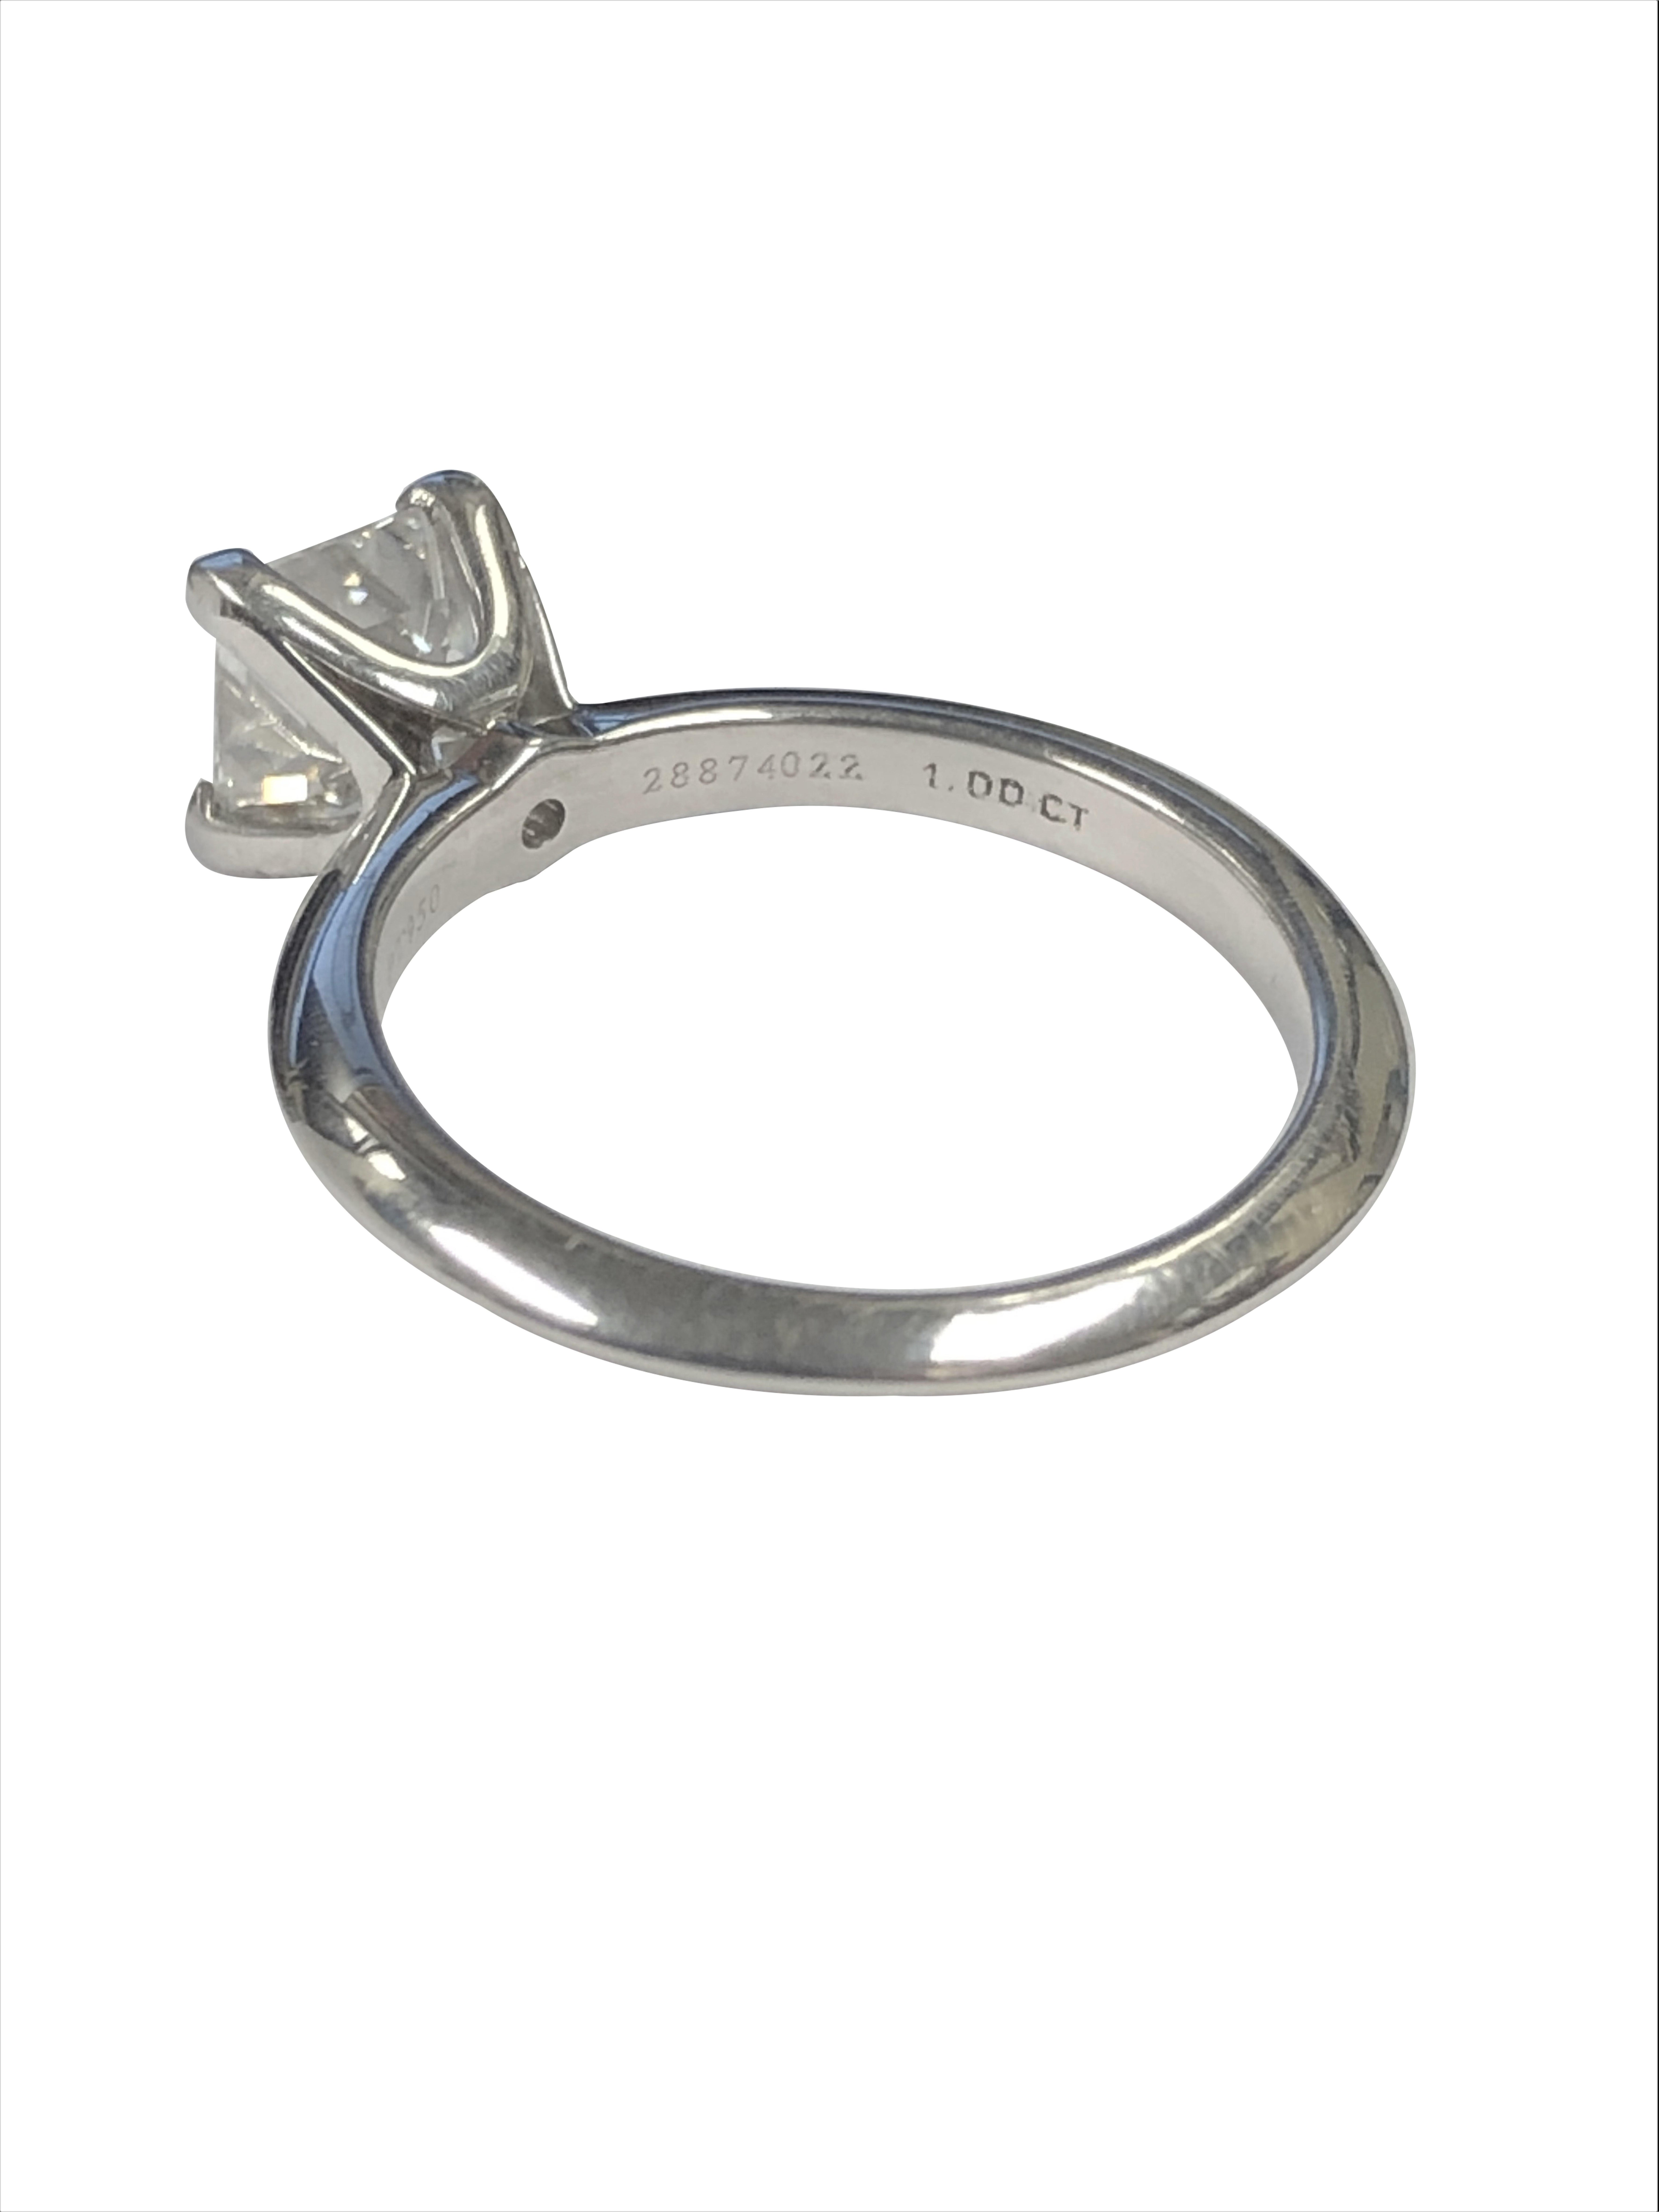 tiffany's 1 carat engagement ring